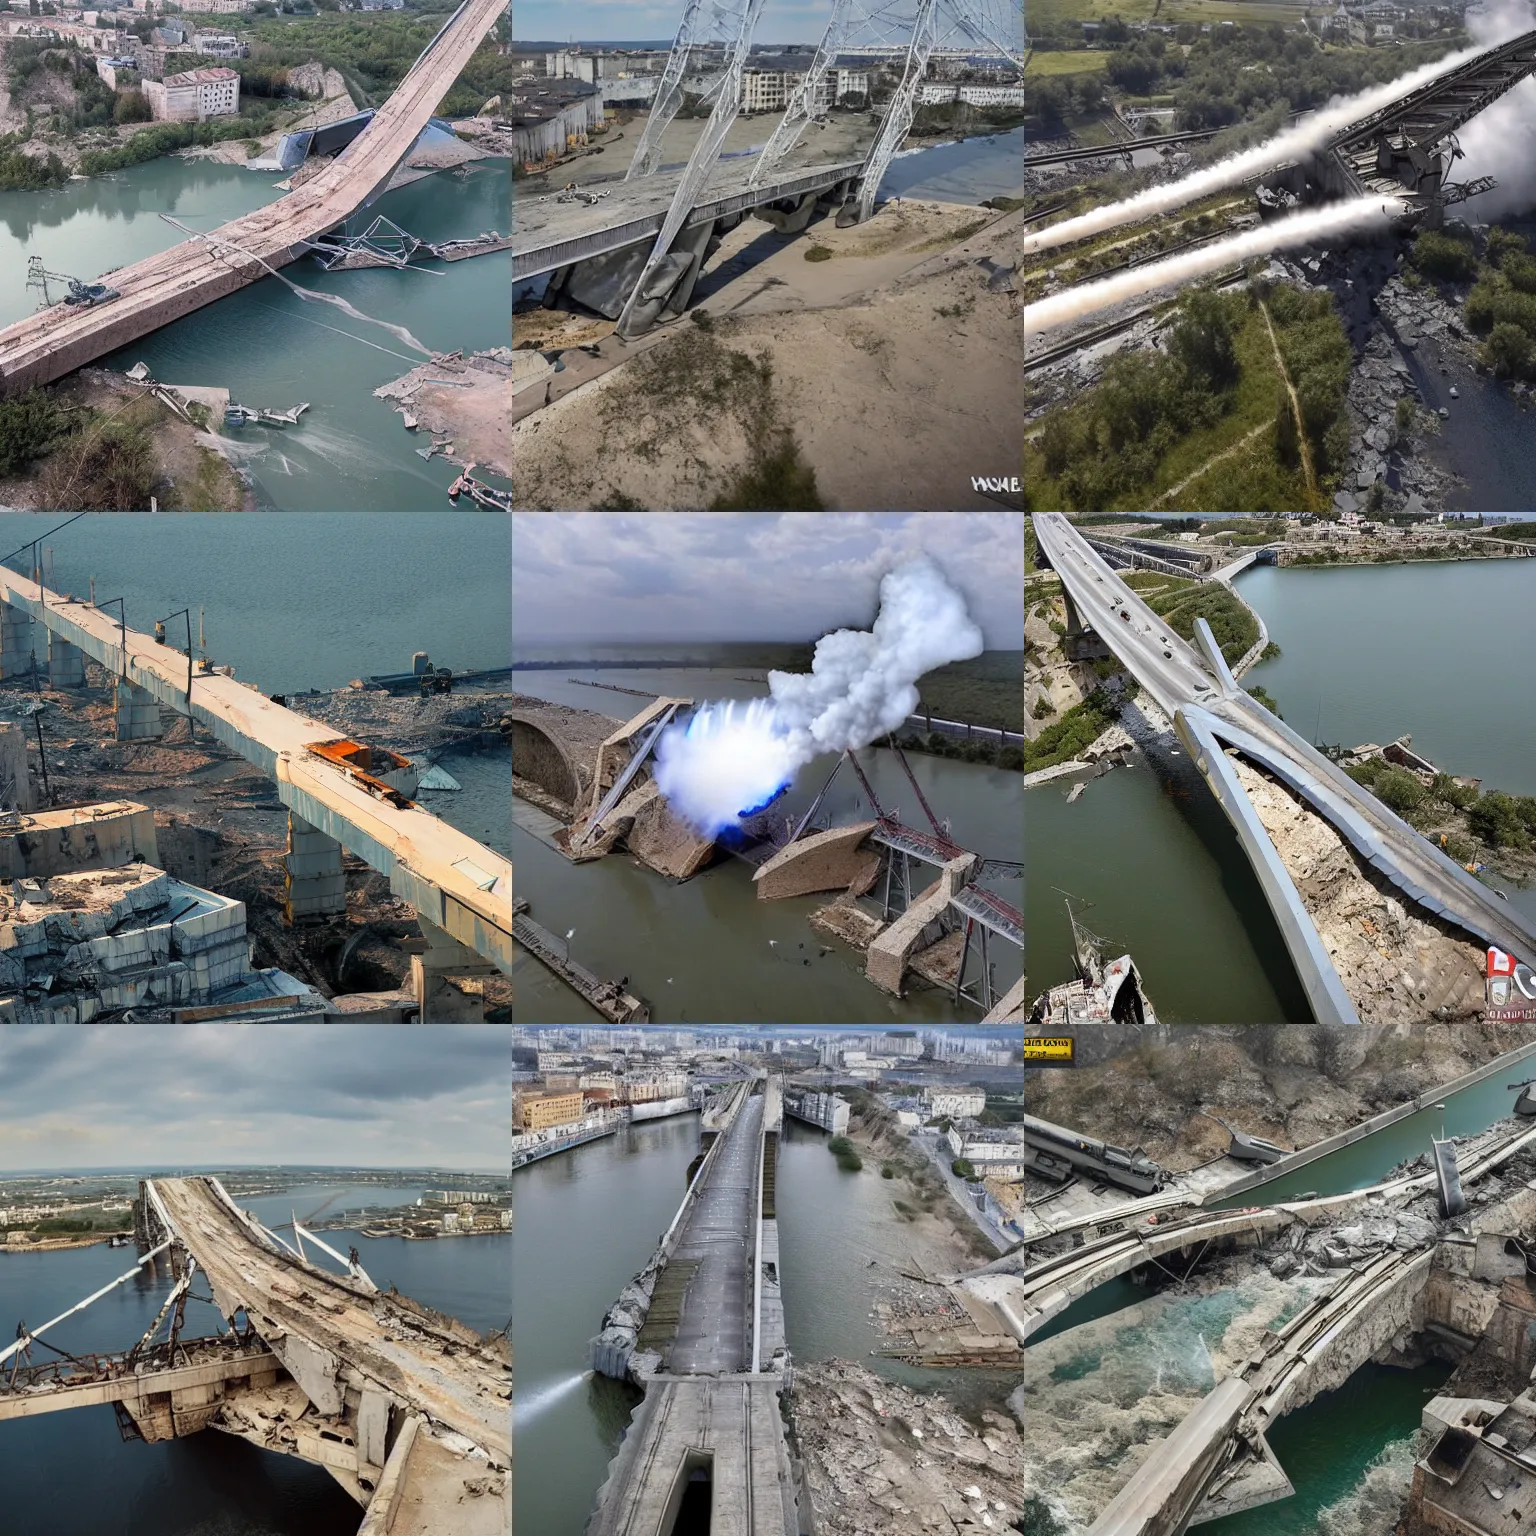 Prompt: war in ukraine, 2 0 2 2, artillery strike in crimea bridge, bridge collapsing, wide angle shot, aerial photograph, hyper realistic, structural failure, catastrophic